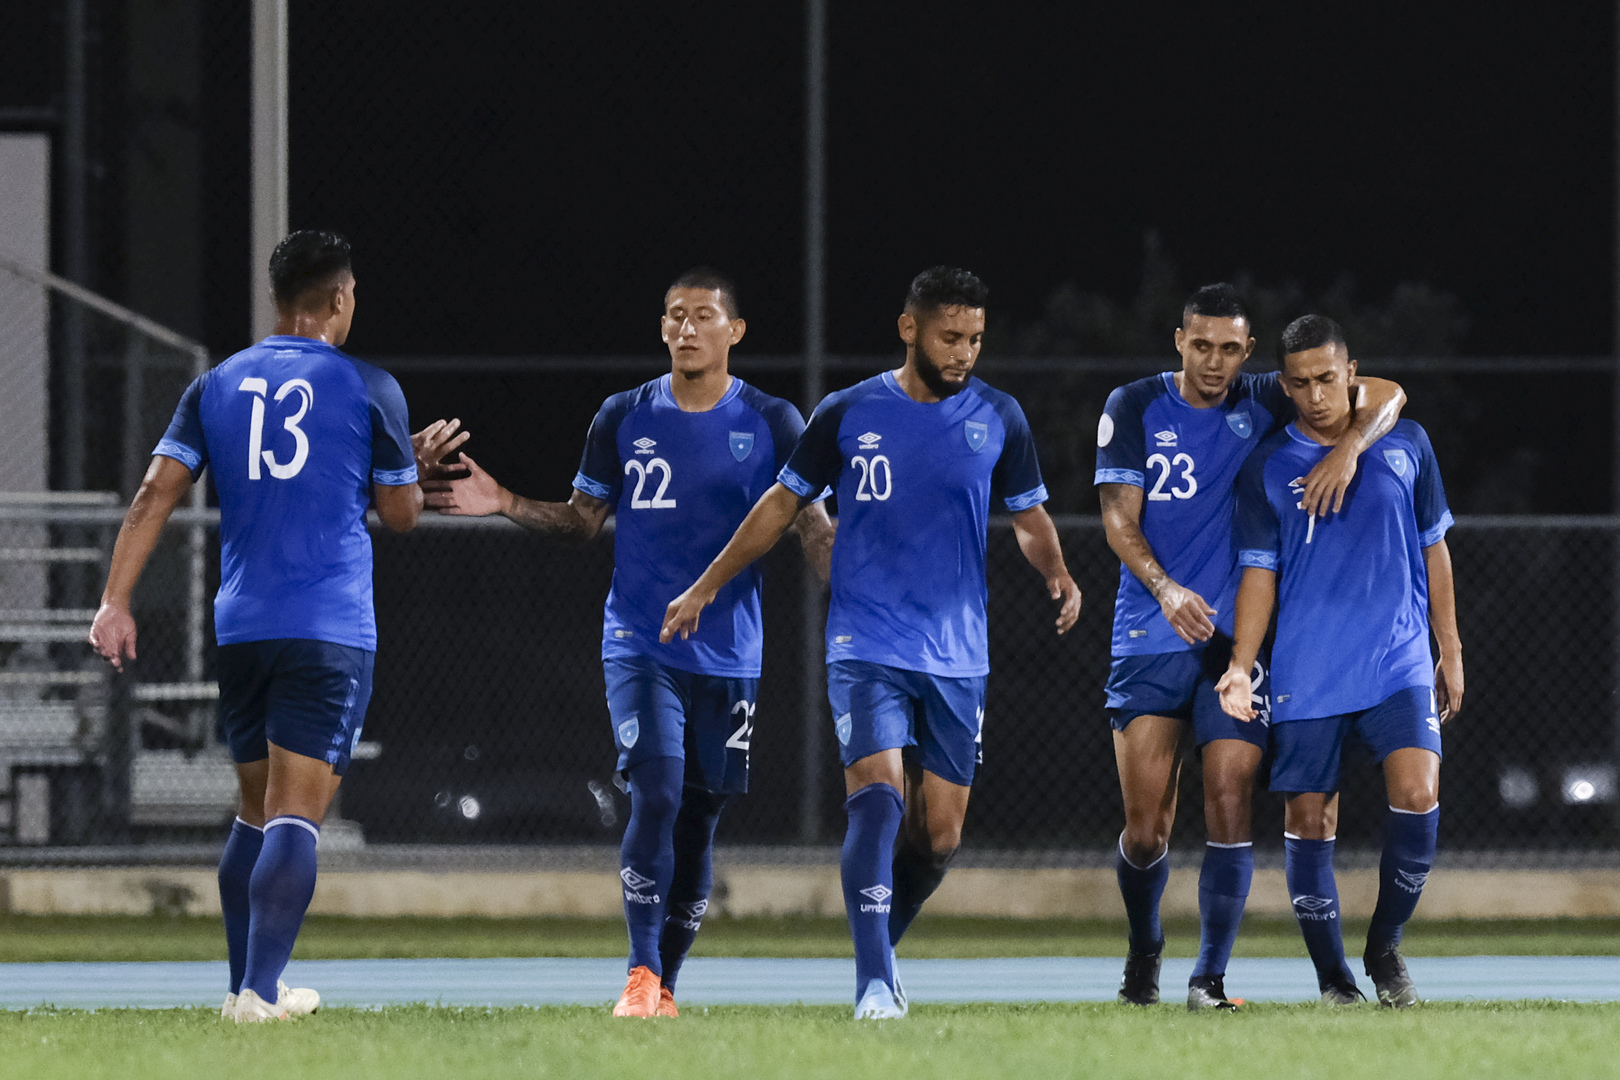 Guatemala, Cuba among teams kicking off League B action